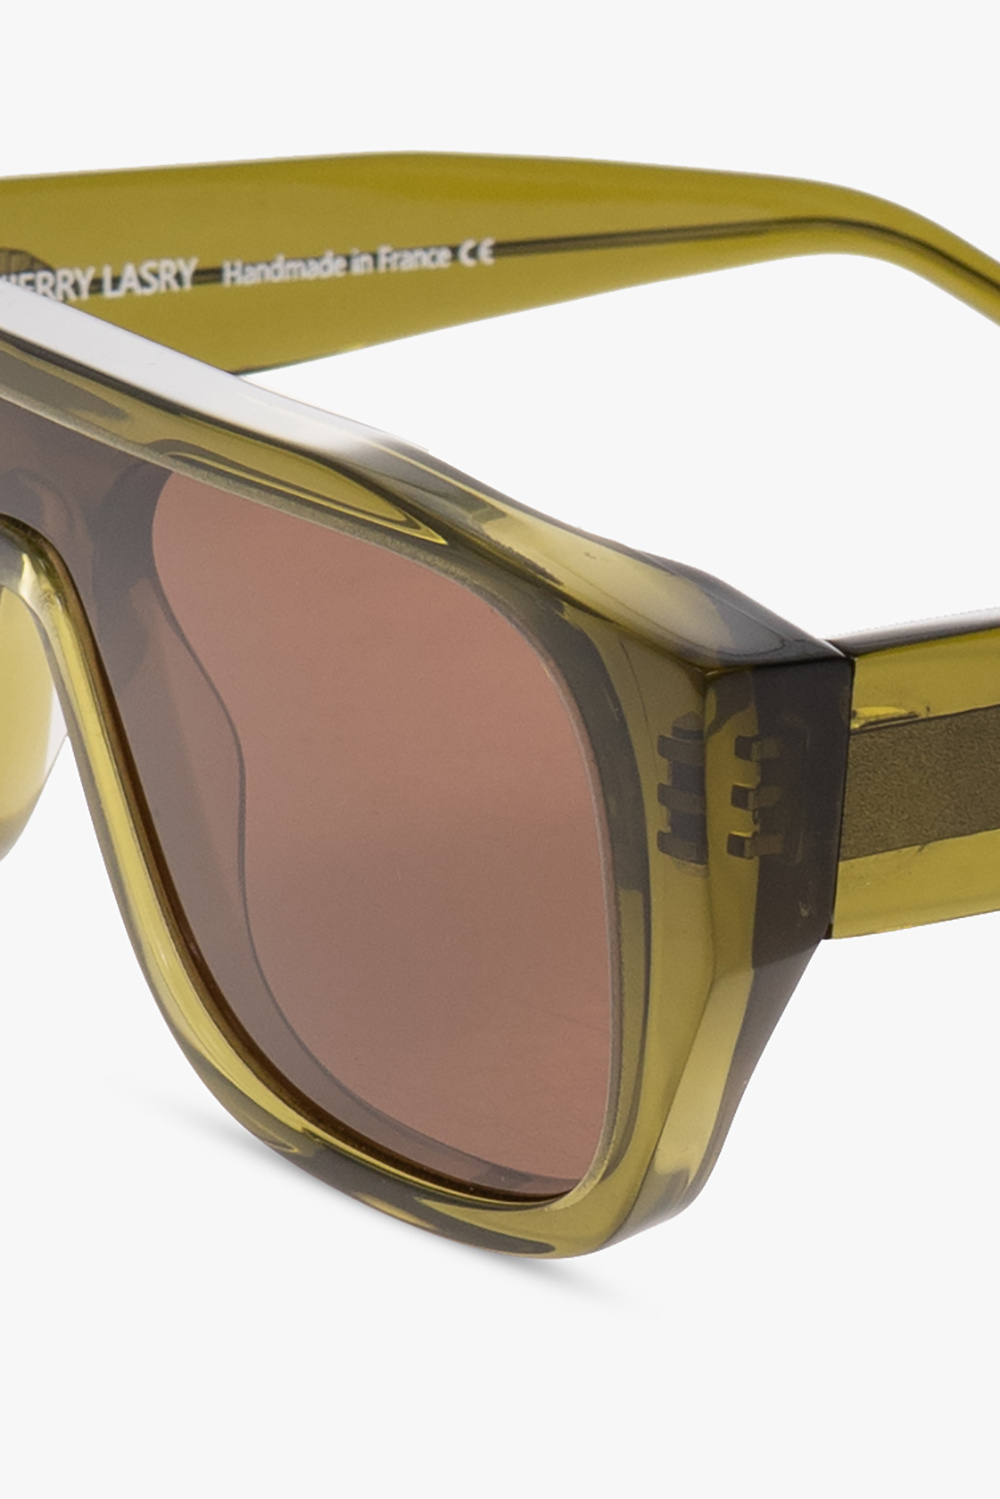 Thierry Lasry ‘Klassy’ sunglasses